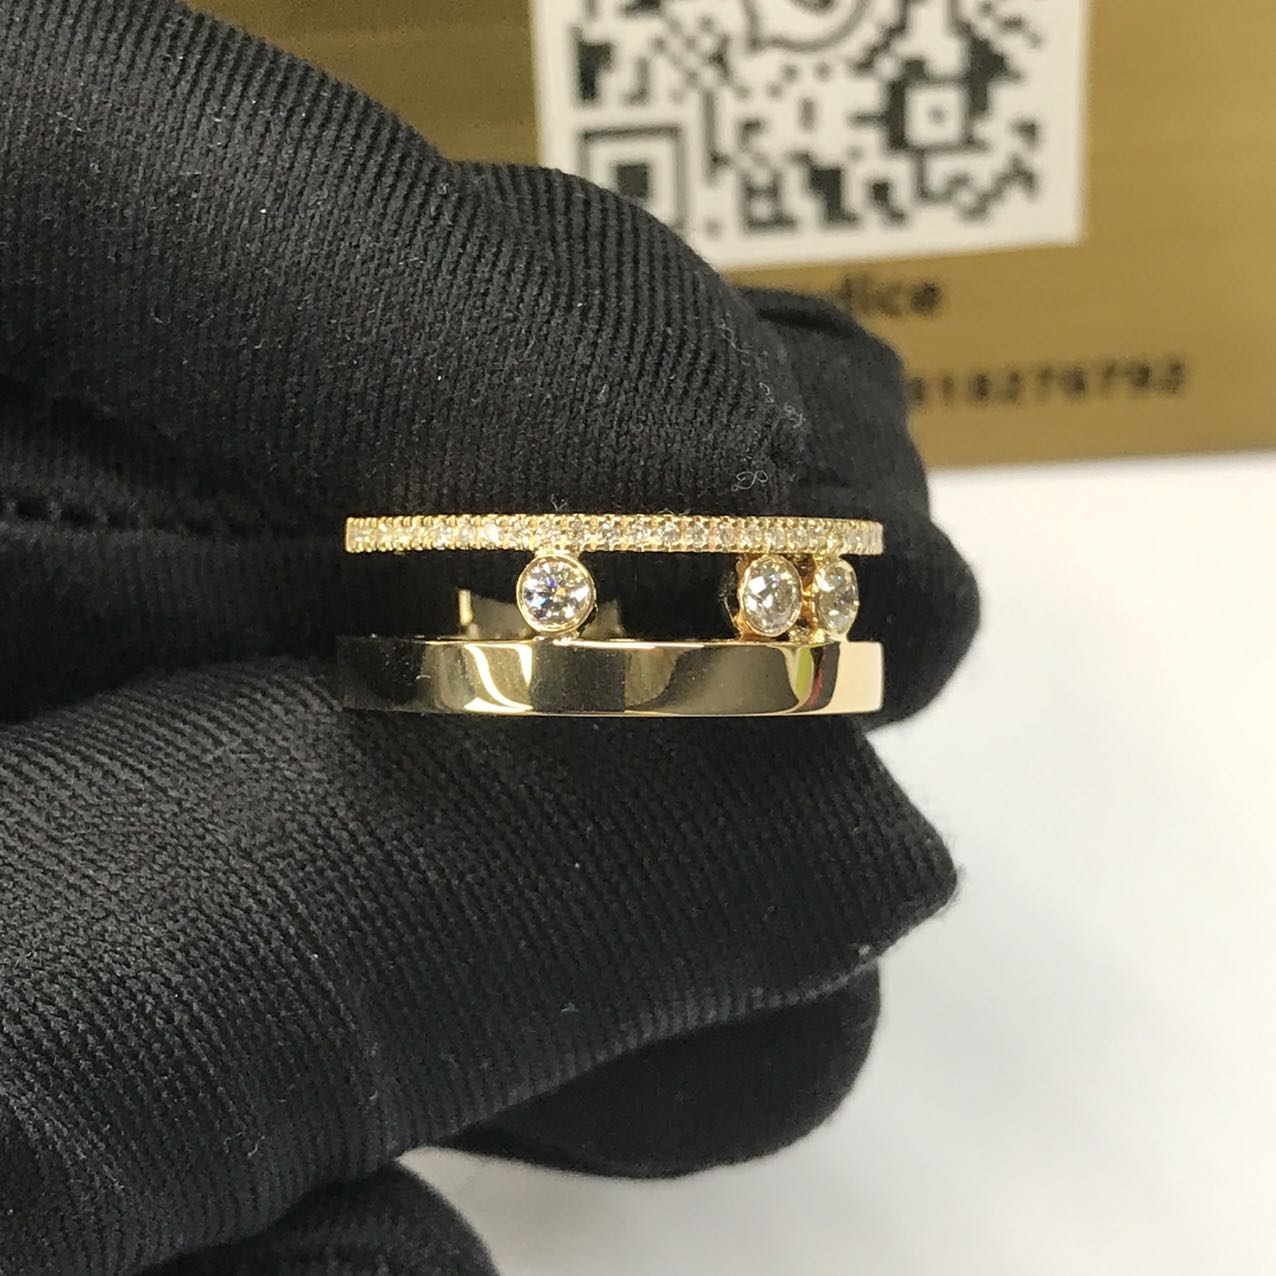 Messika Copy 18K Solid Gold Move Romane Diamond Ring 6516